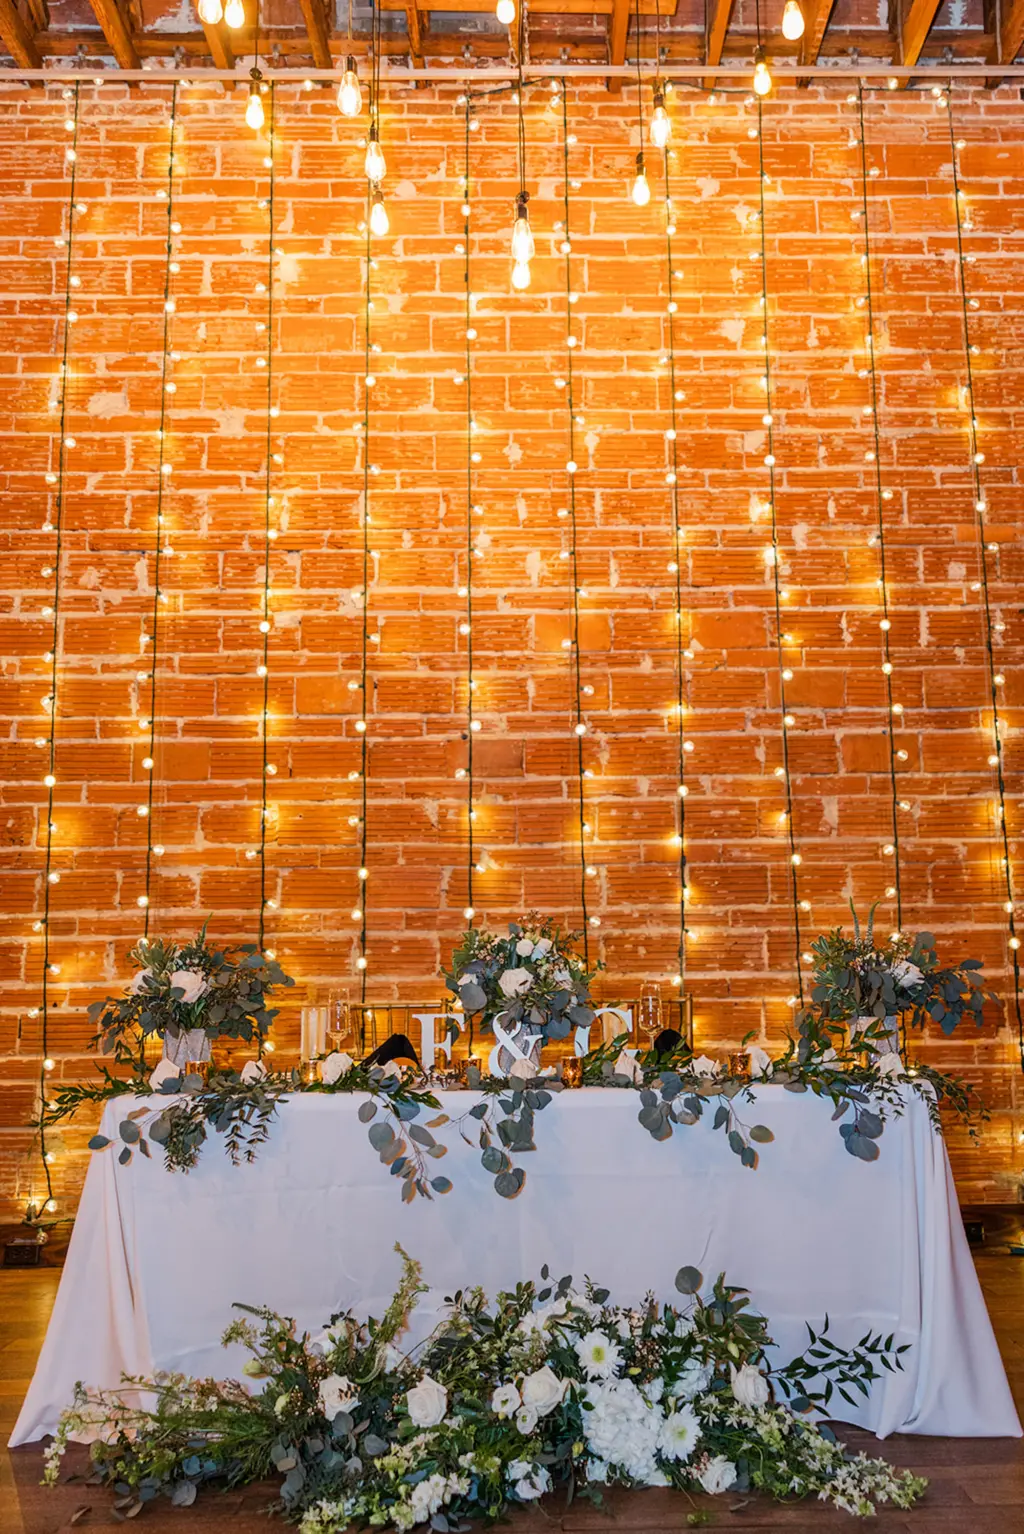 Elegant String Light Backdrop | Eucalyptus Greenery Garland with Gold Mercury Votives | Wedding Reception Sweetheart Table Decor Inspiration